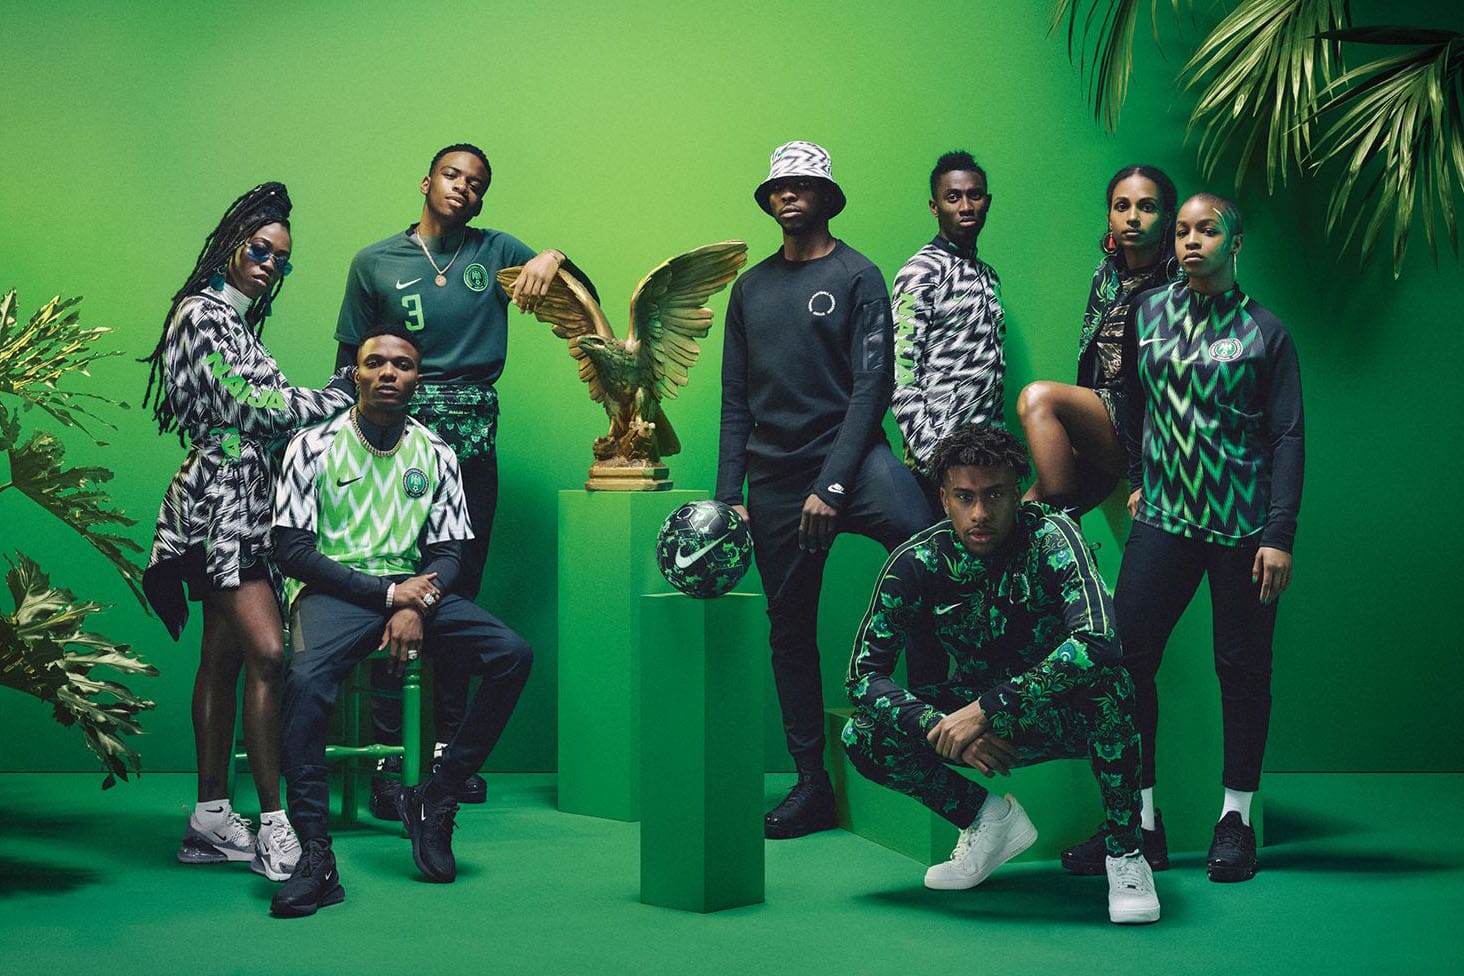 nike nigeria jersey 2019